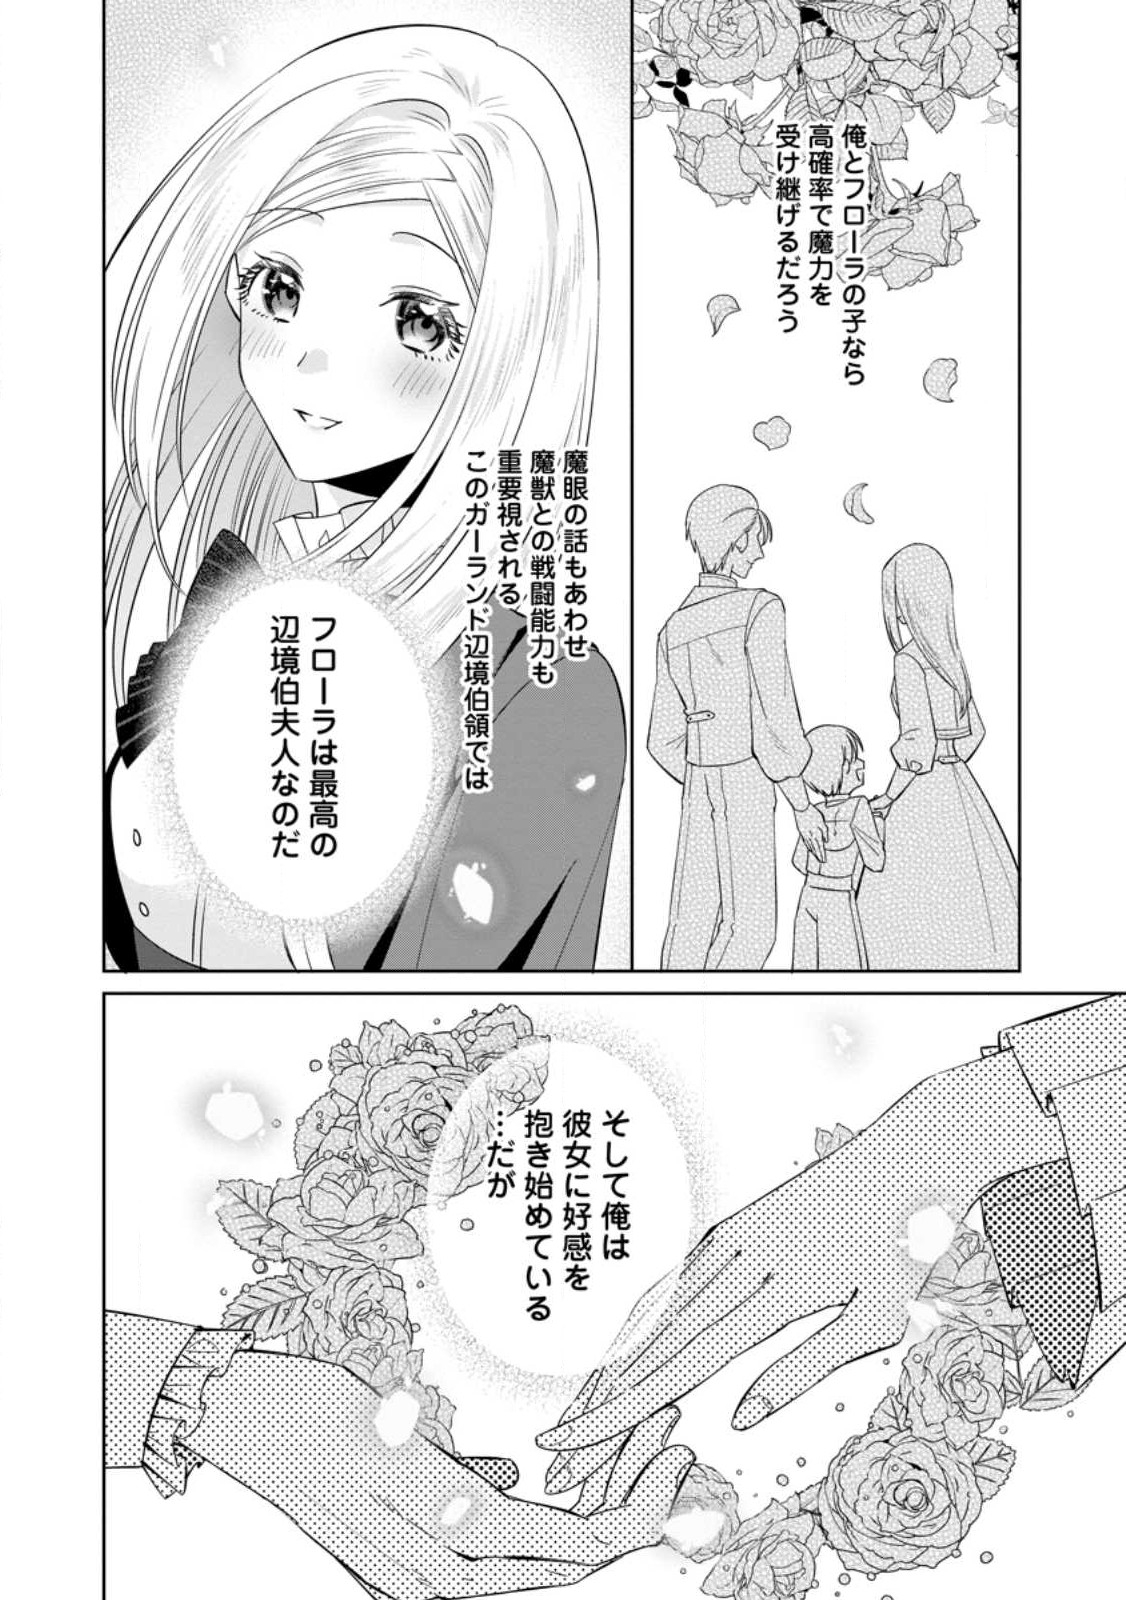 Positive Reijou Flora no Shiawase na Keiyaku Kekkon - Chapter 8.2 - Page 2